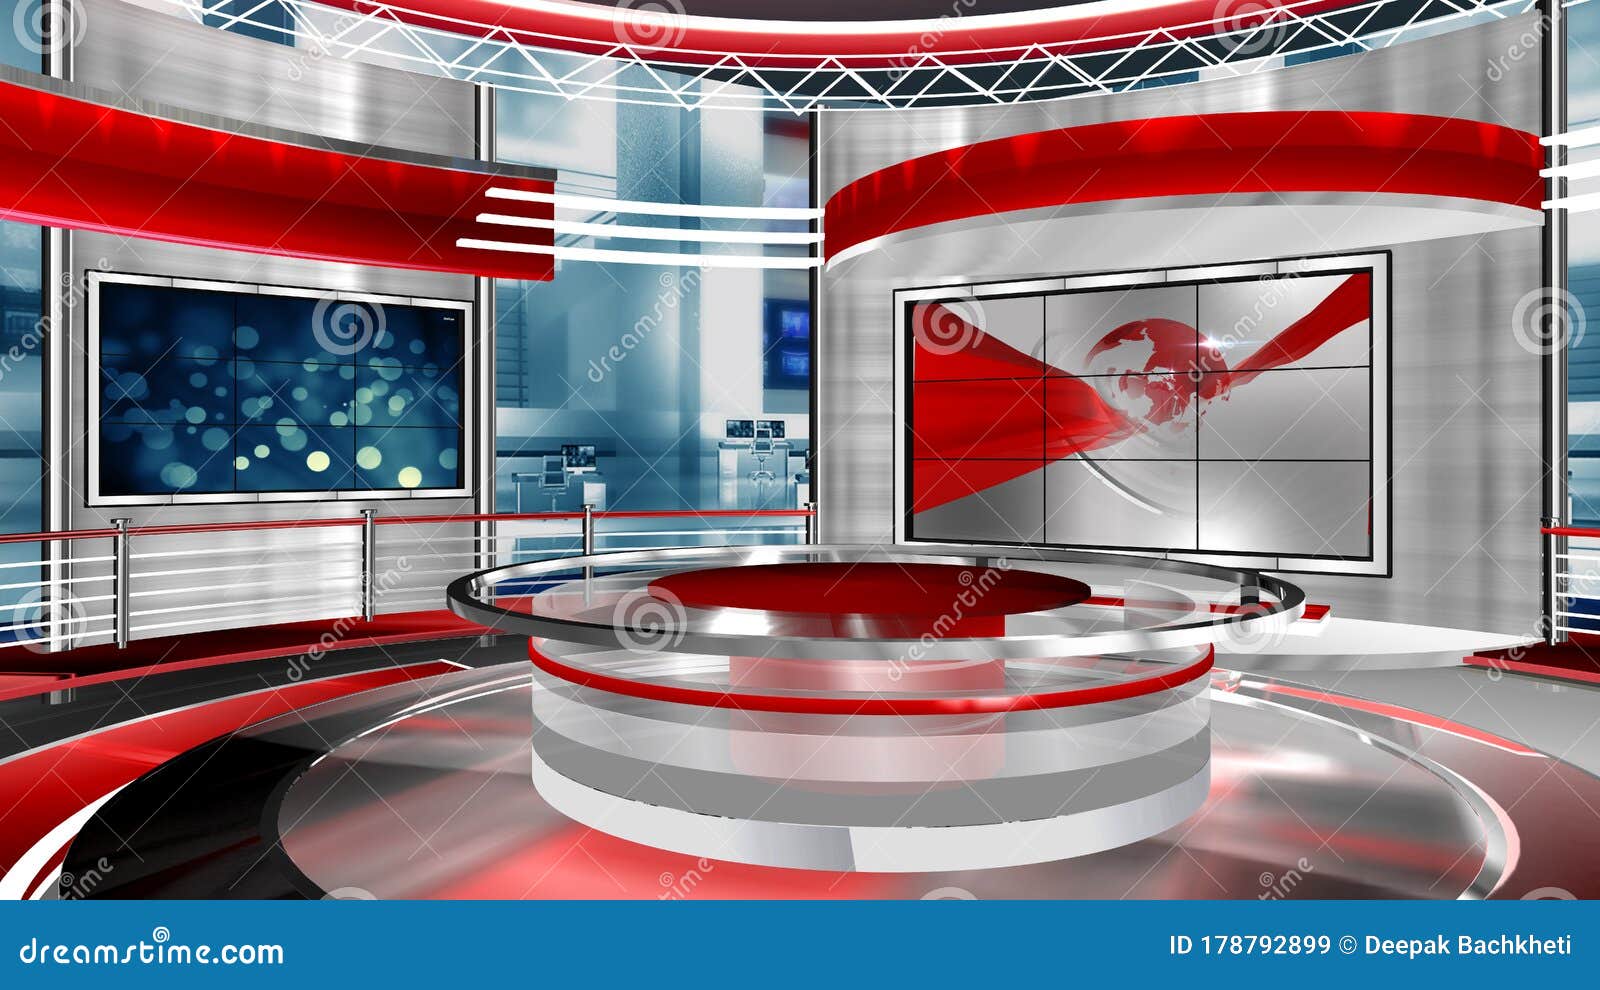 Newsroom Background Images - Free Download on Freepik